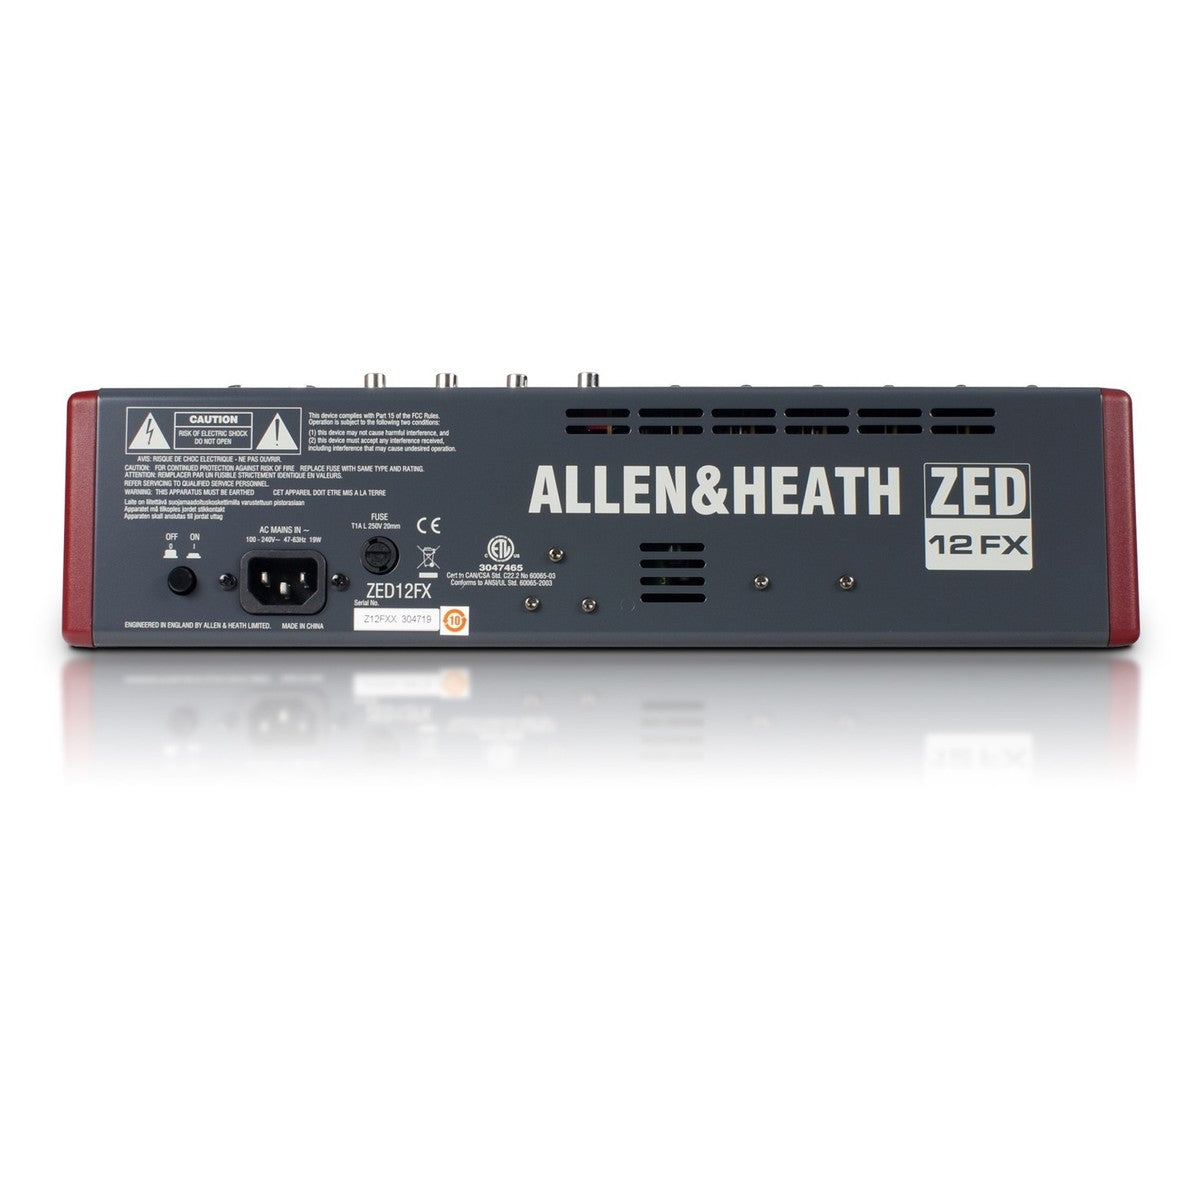 Allen & Heath ZED-12FX 12-channel Mixer with USB Audio Interface & Effects